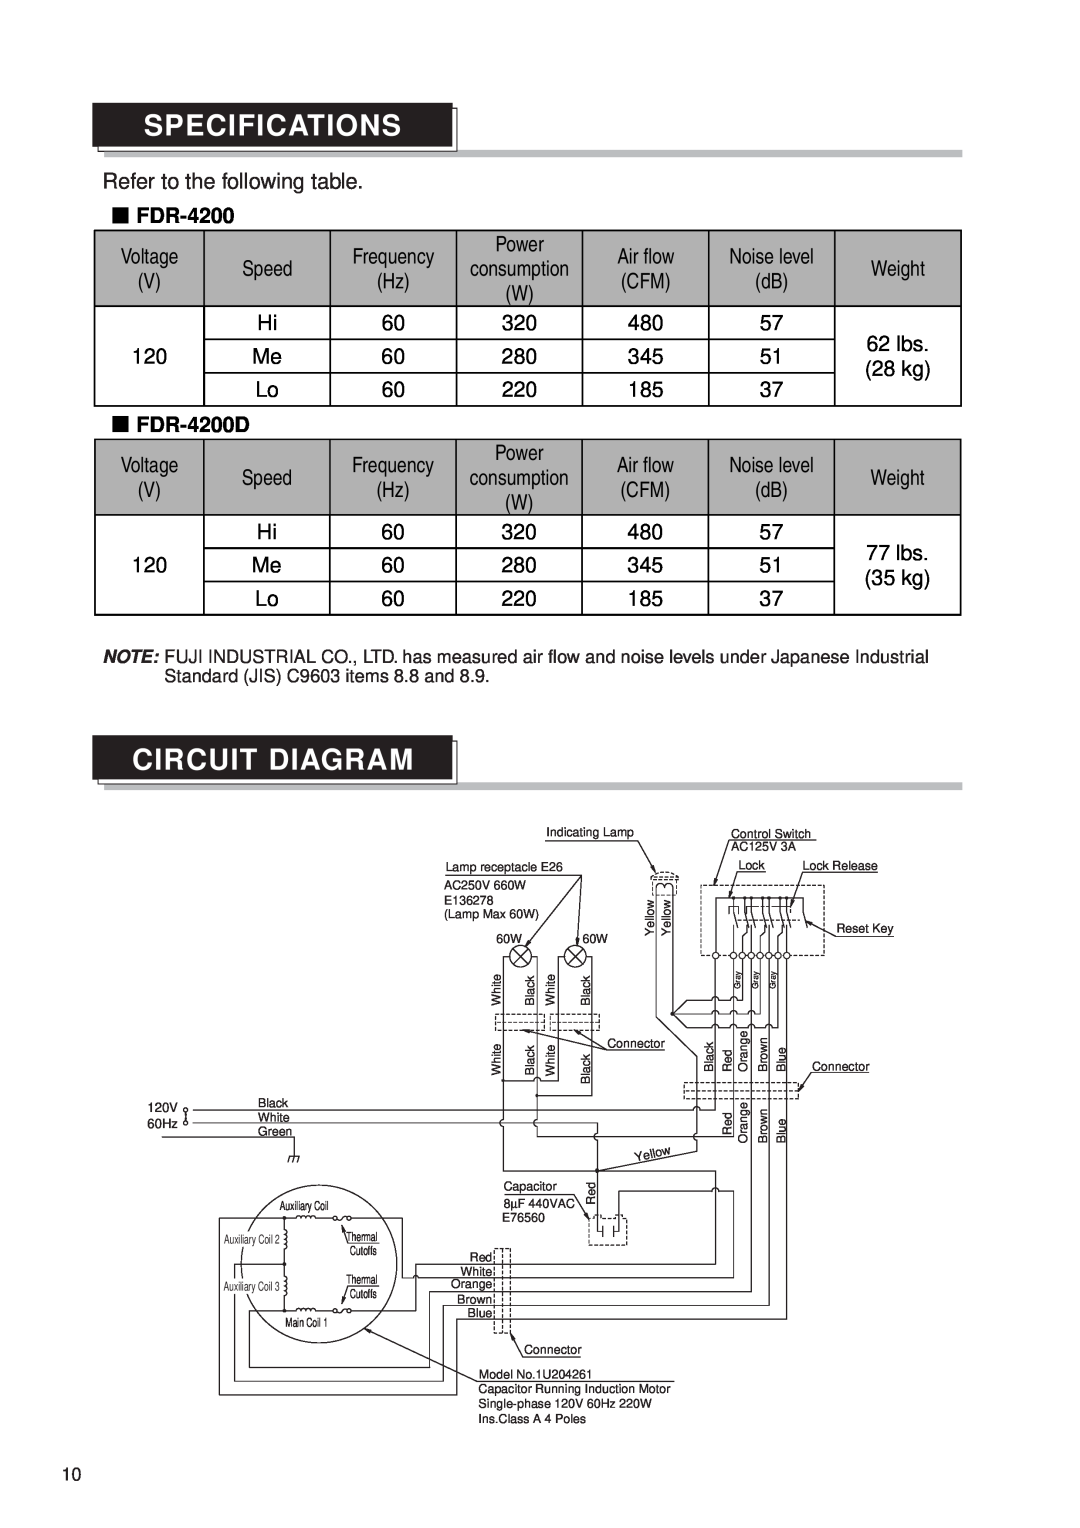 Fujioh FDR-4200D operation manual Specifications, Circuit Diagram 